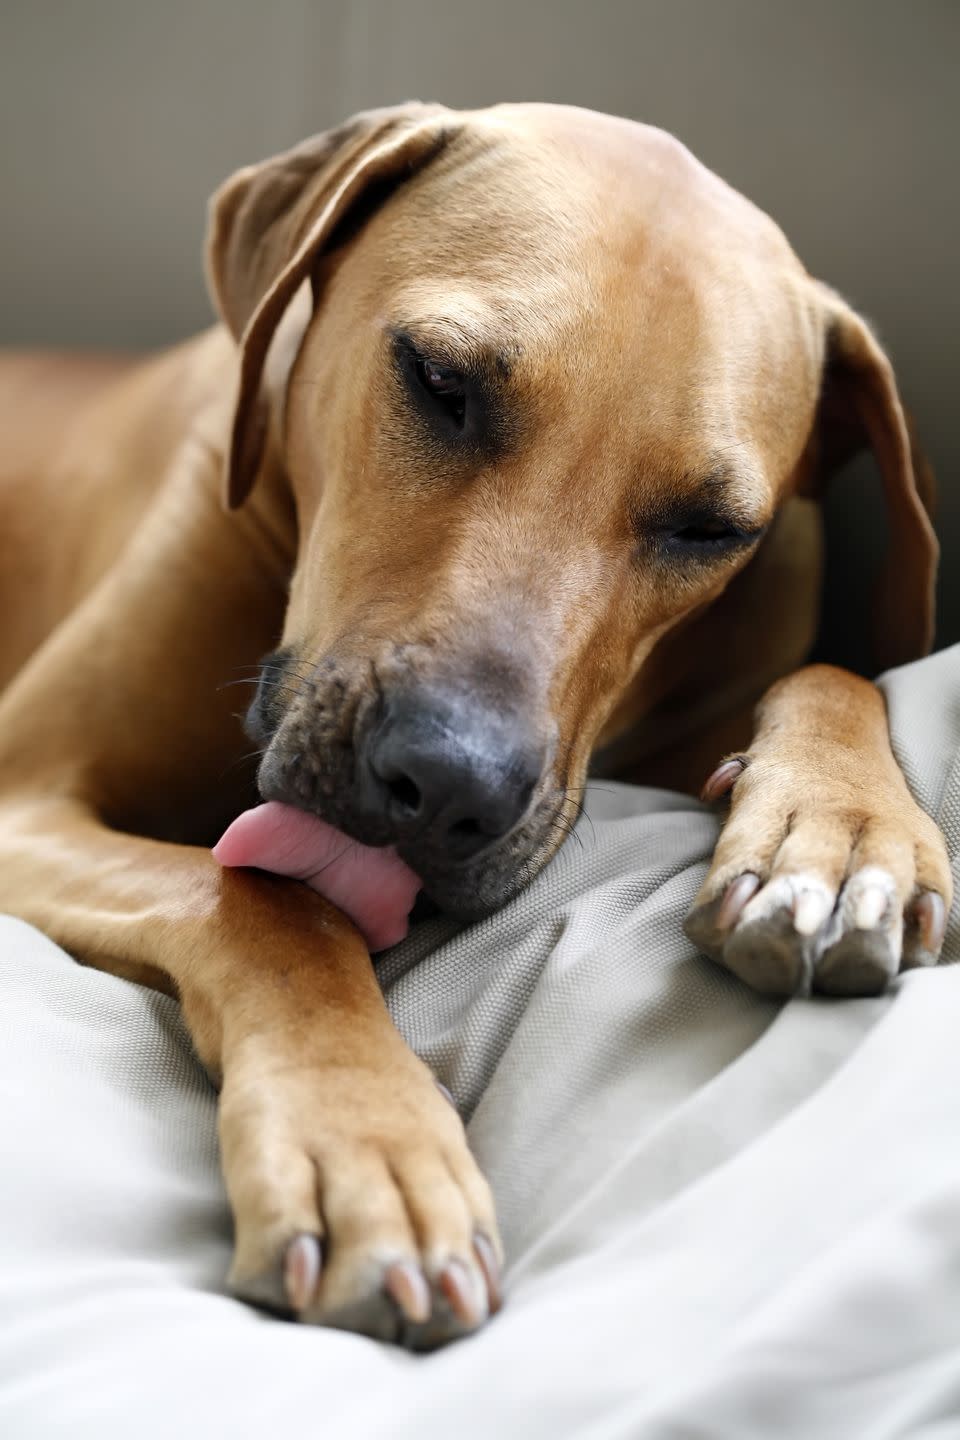 dog licking its paw